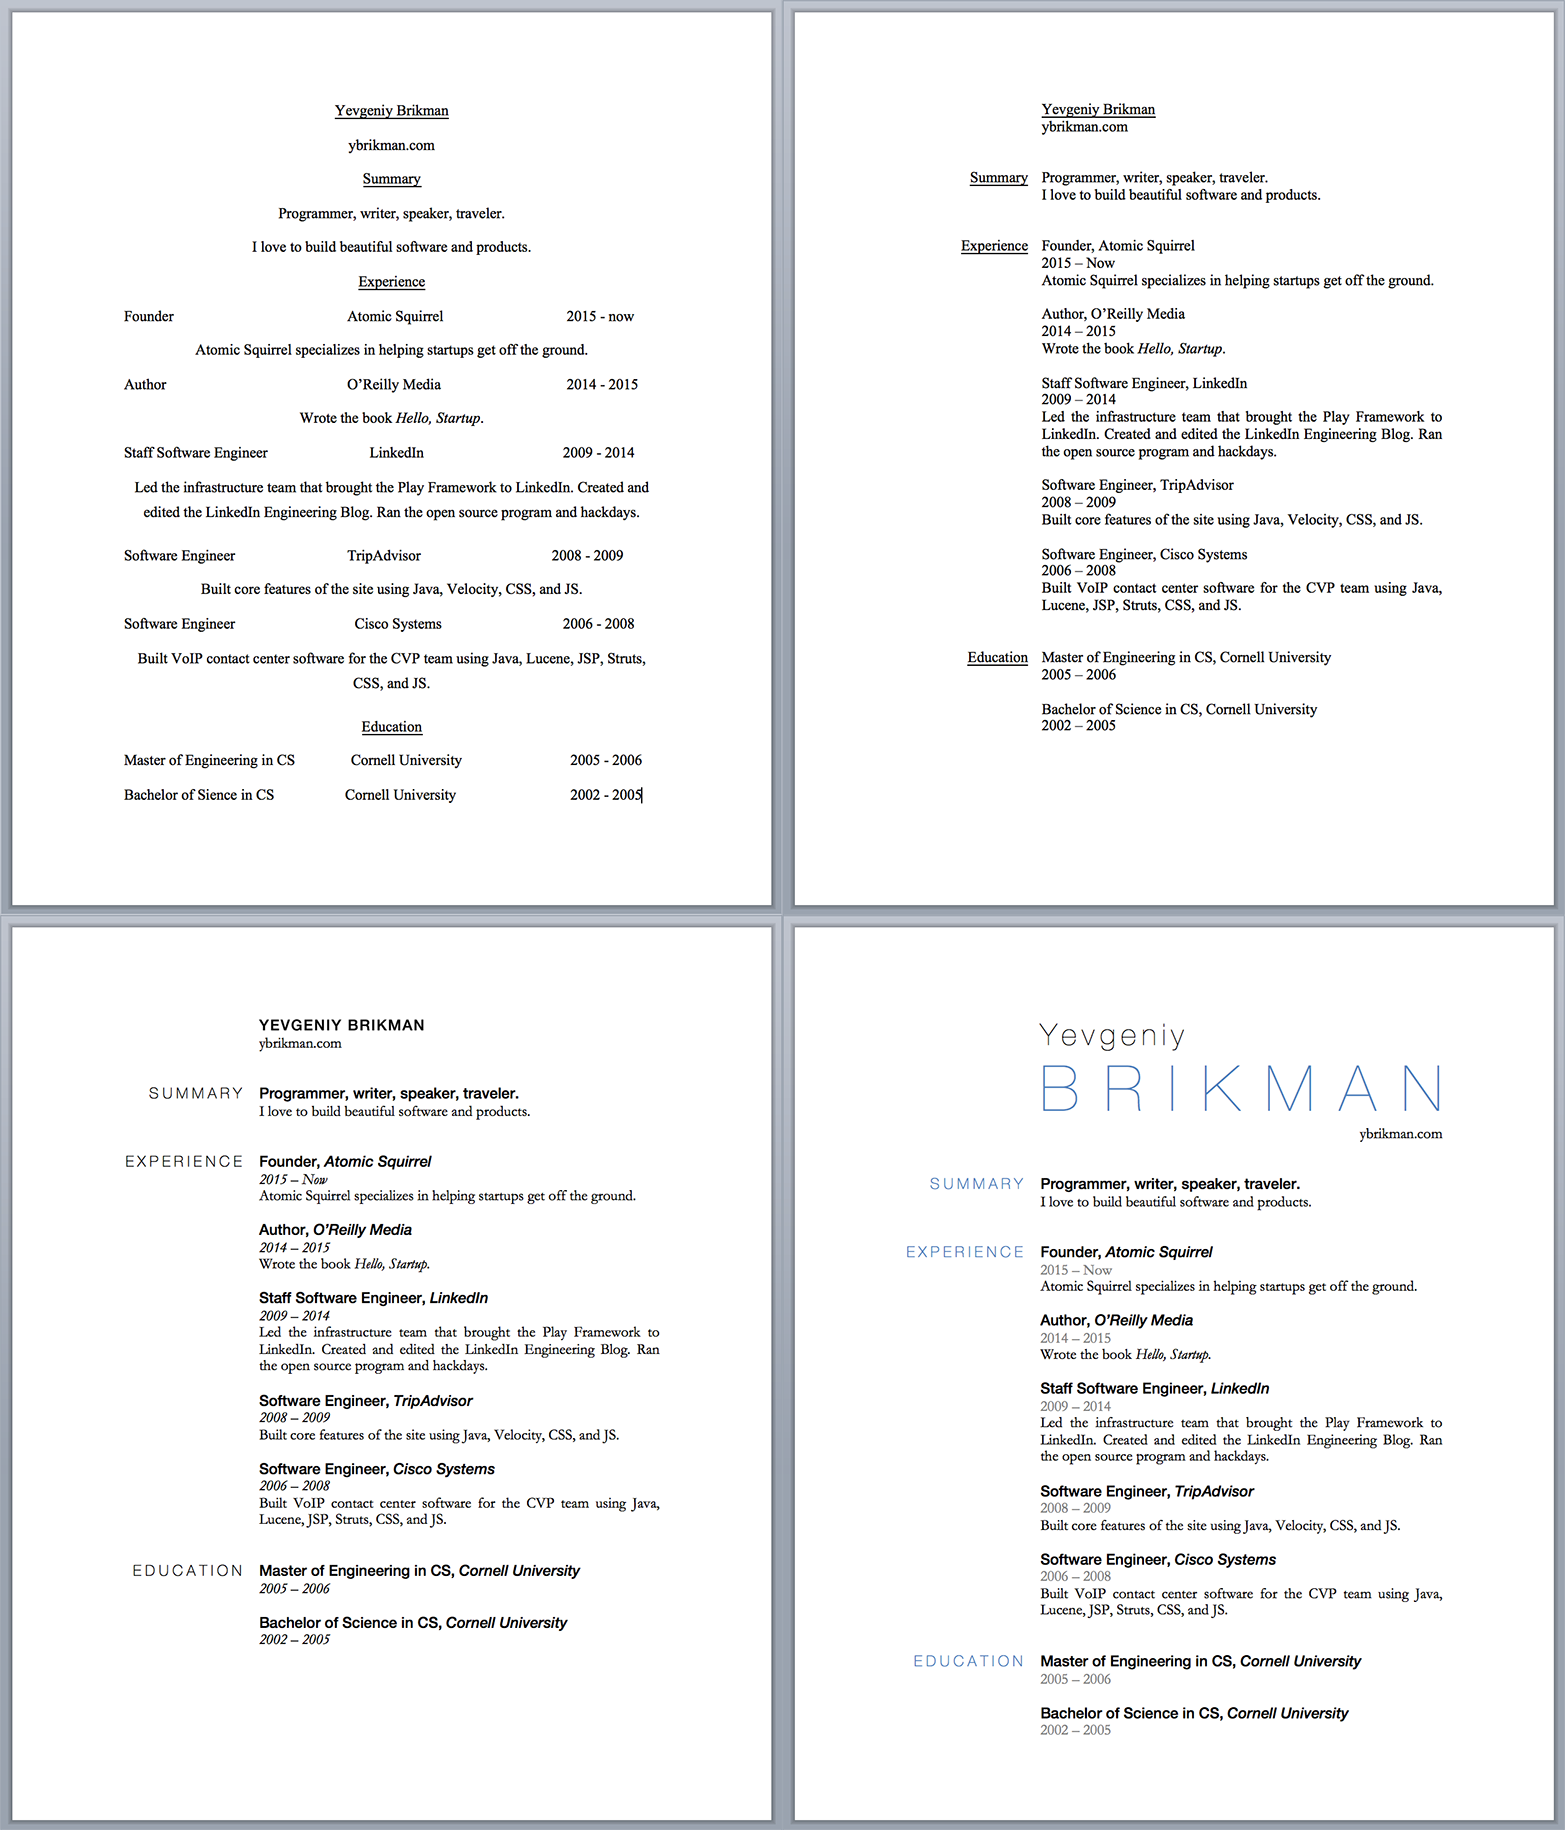 The progression of the resume design.